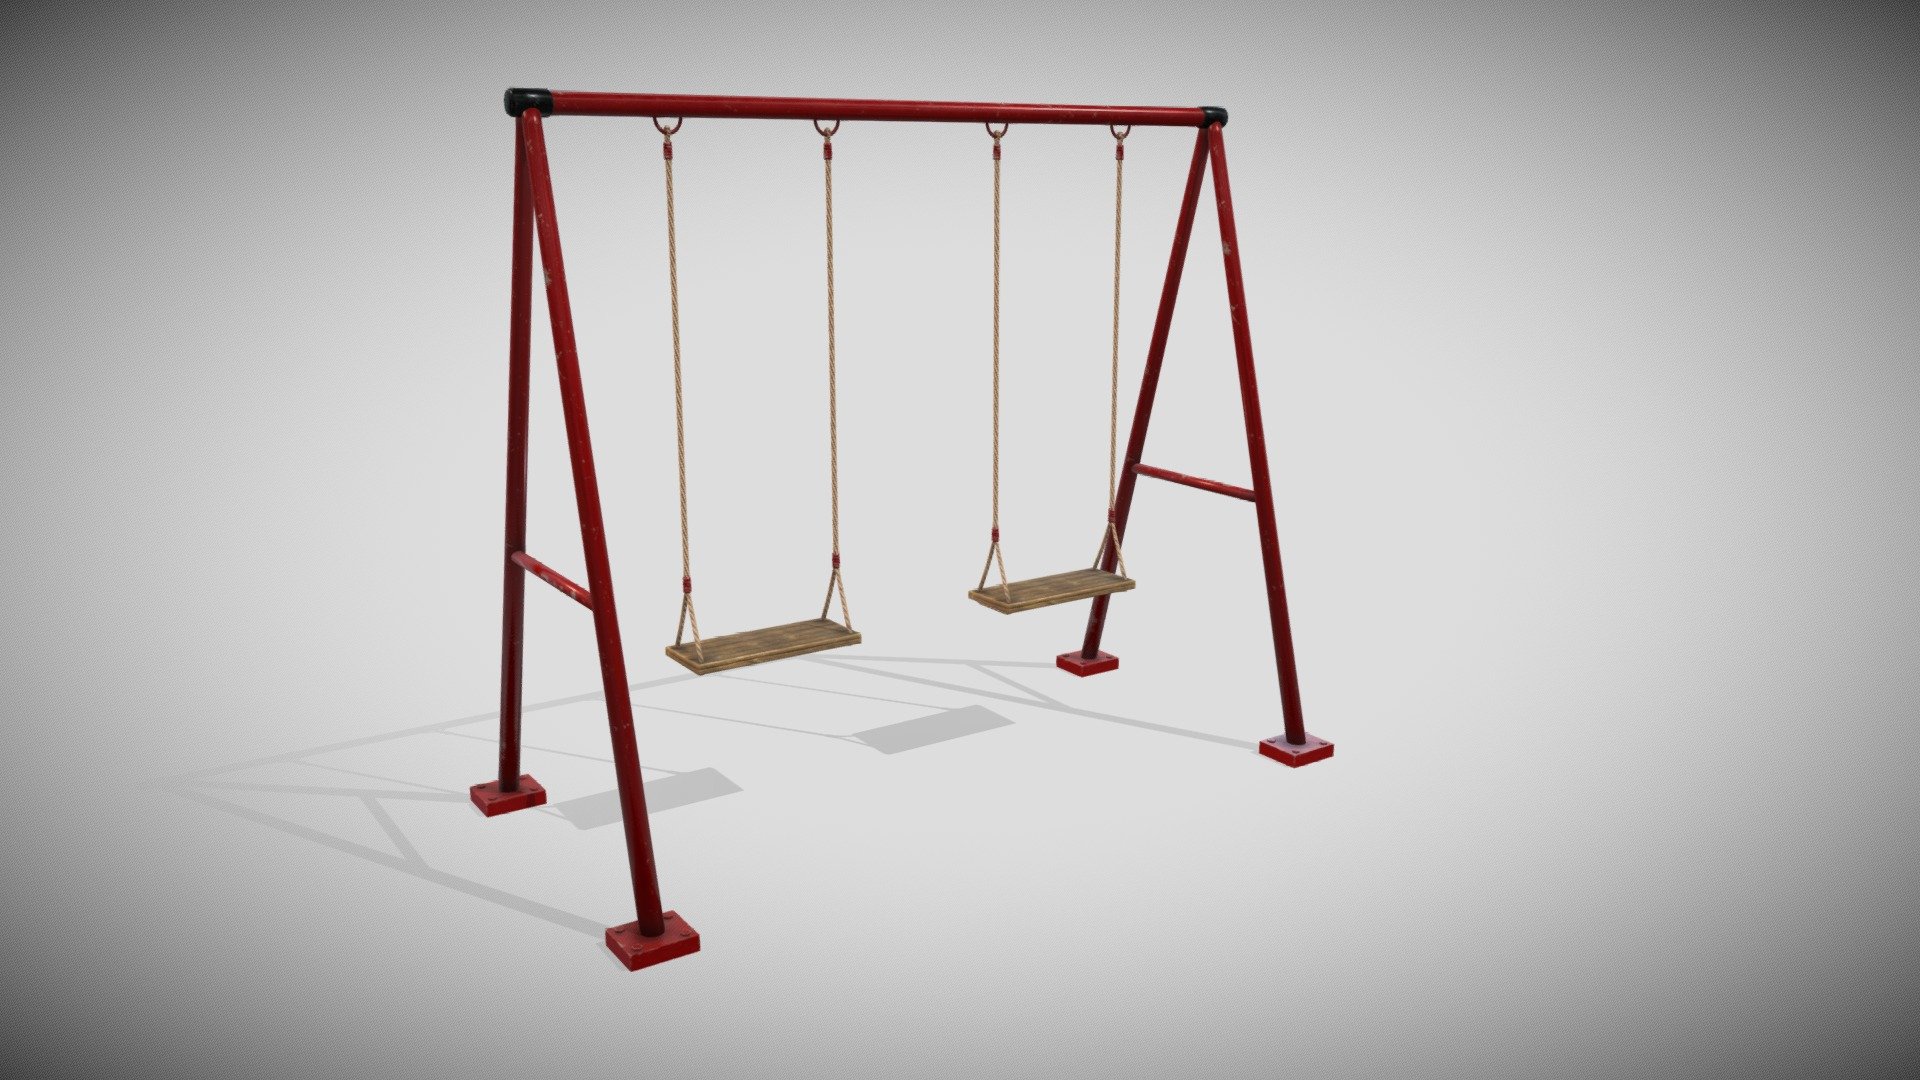 Playground Swing 3d Model By Sergio Delacruz Killah81 C47312e Sketchfab